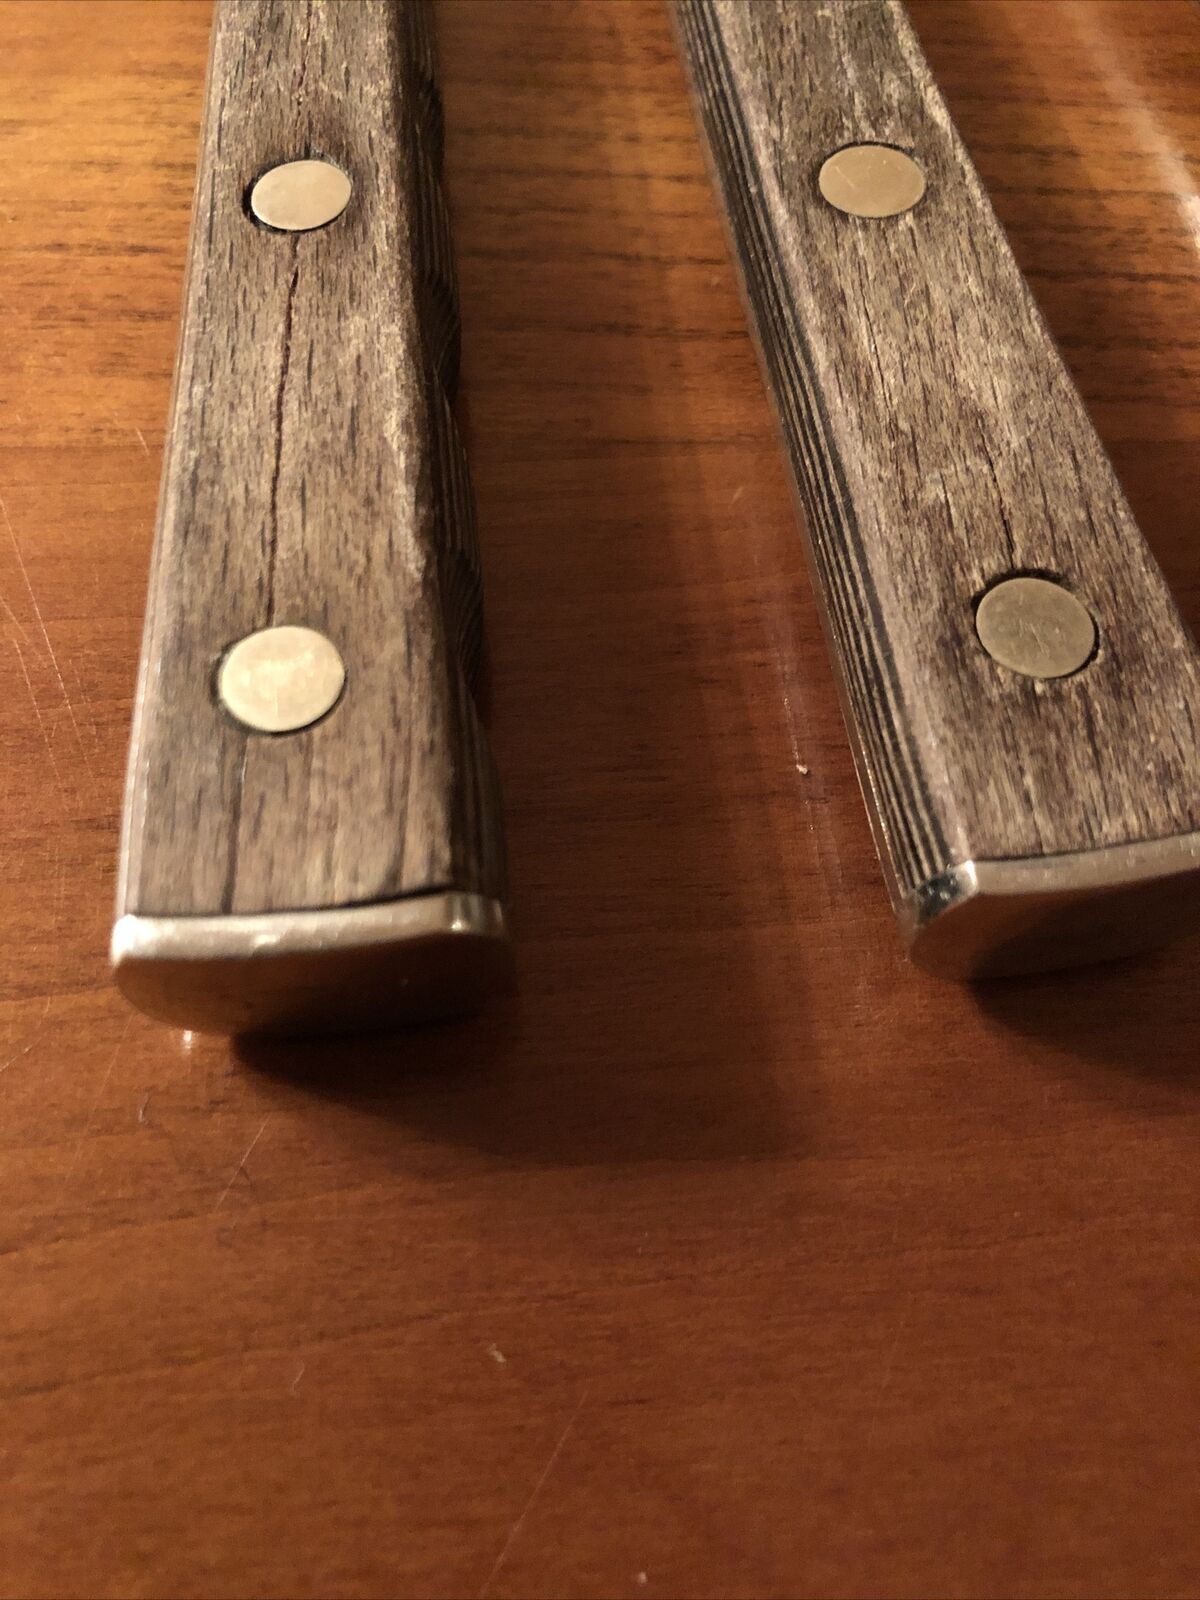 Silvern Wood Carving Knife - Hardwood Handle